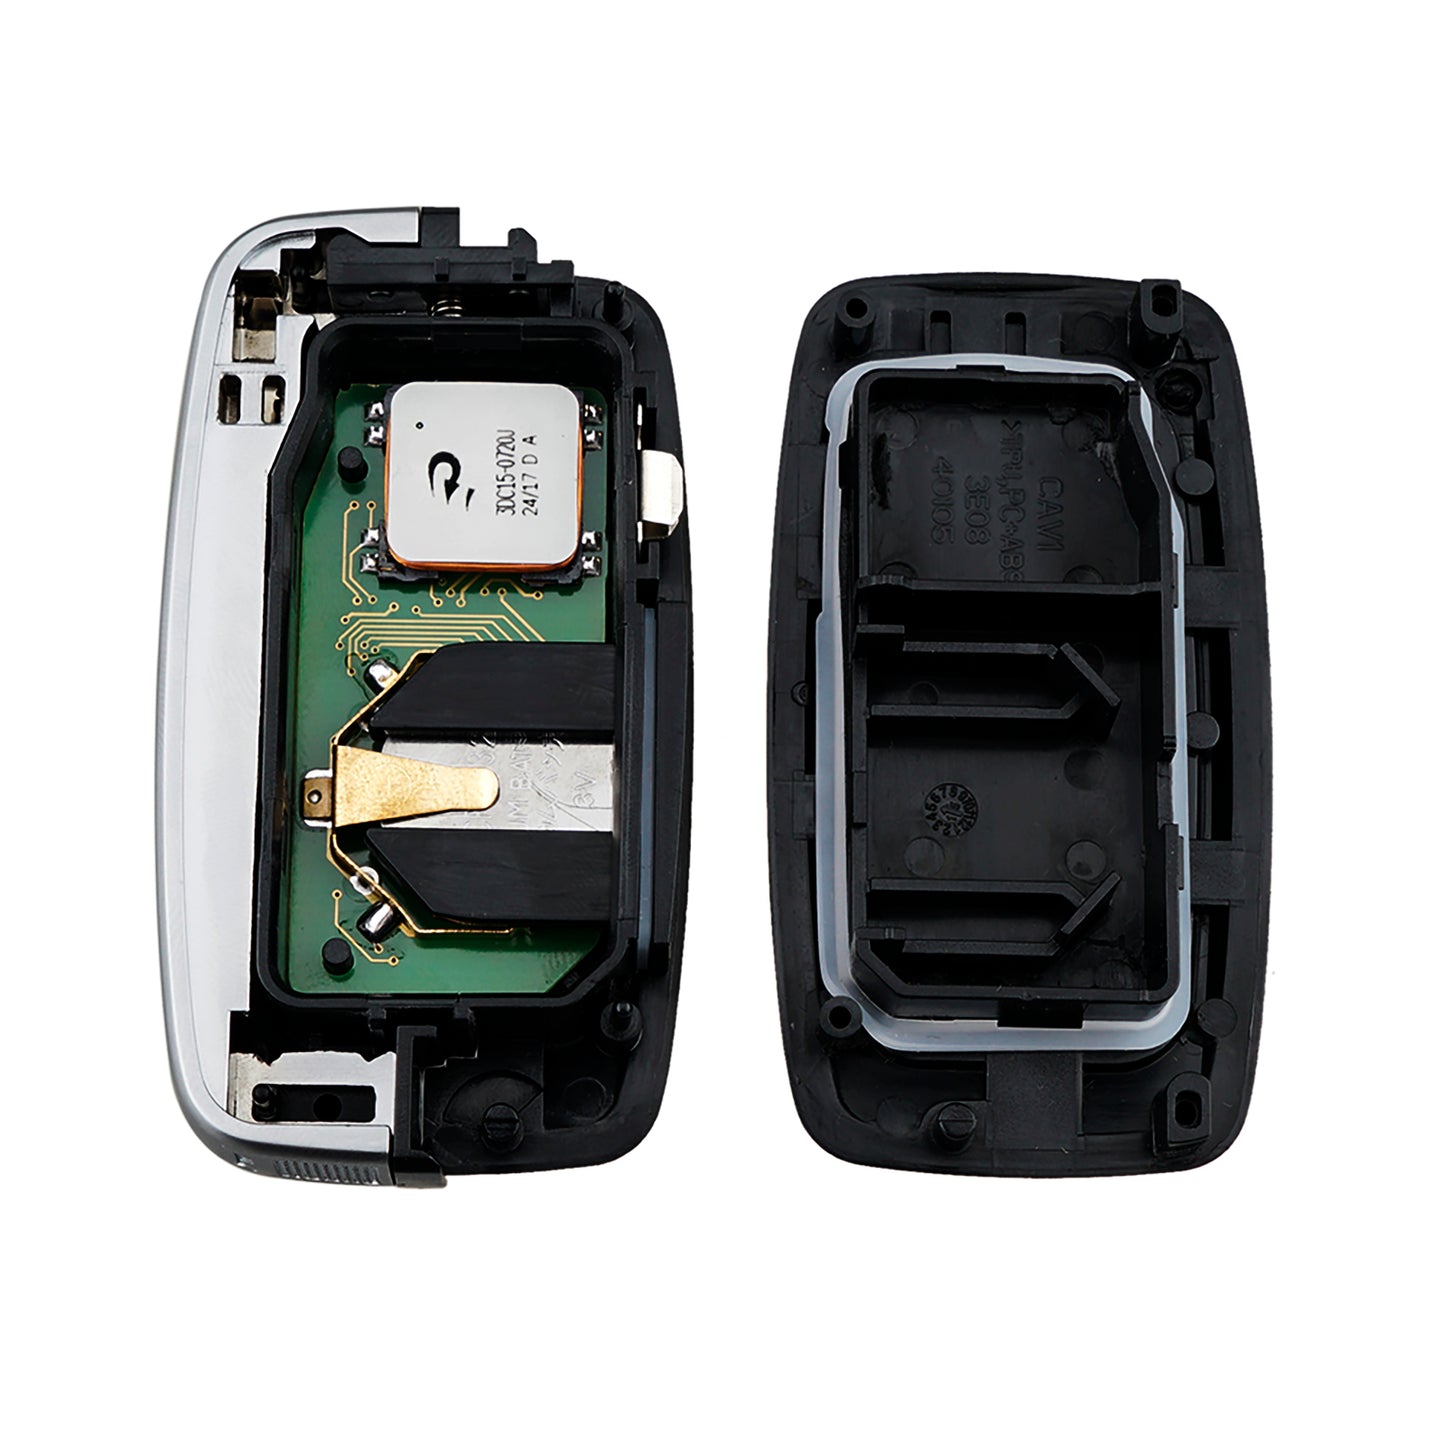 5 Buttons 315MHz Keyless Entry Fob Remote Car Key For 2012-2018 Land Rover LR2 LR4 Discovery FCC ID: KOBJTF10A SKU : J183